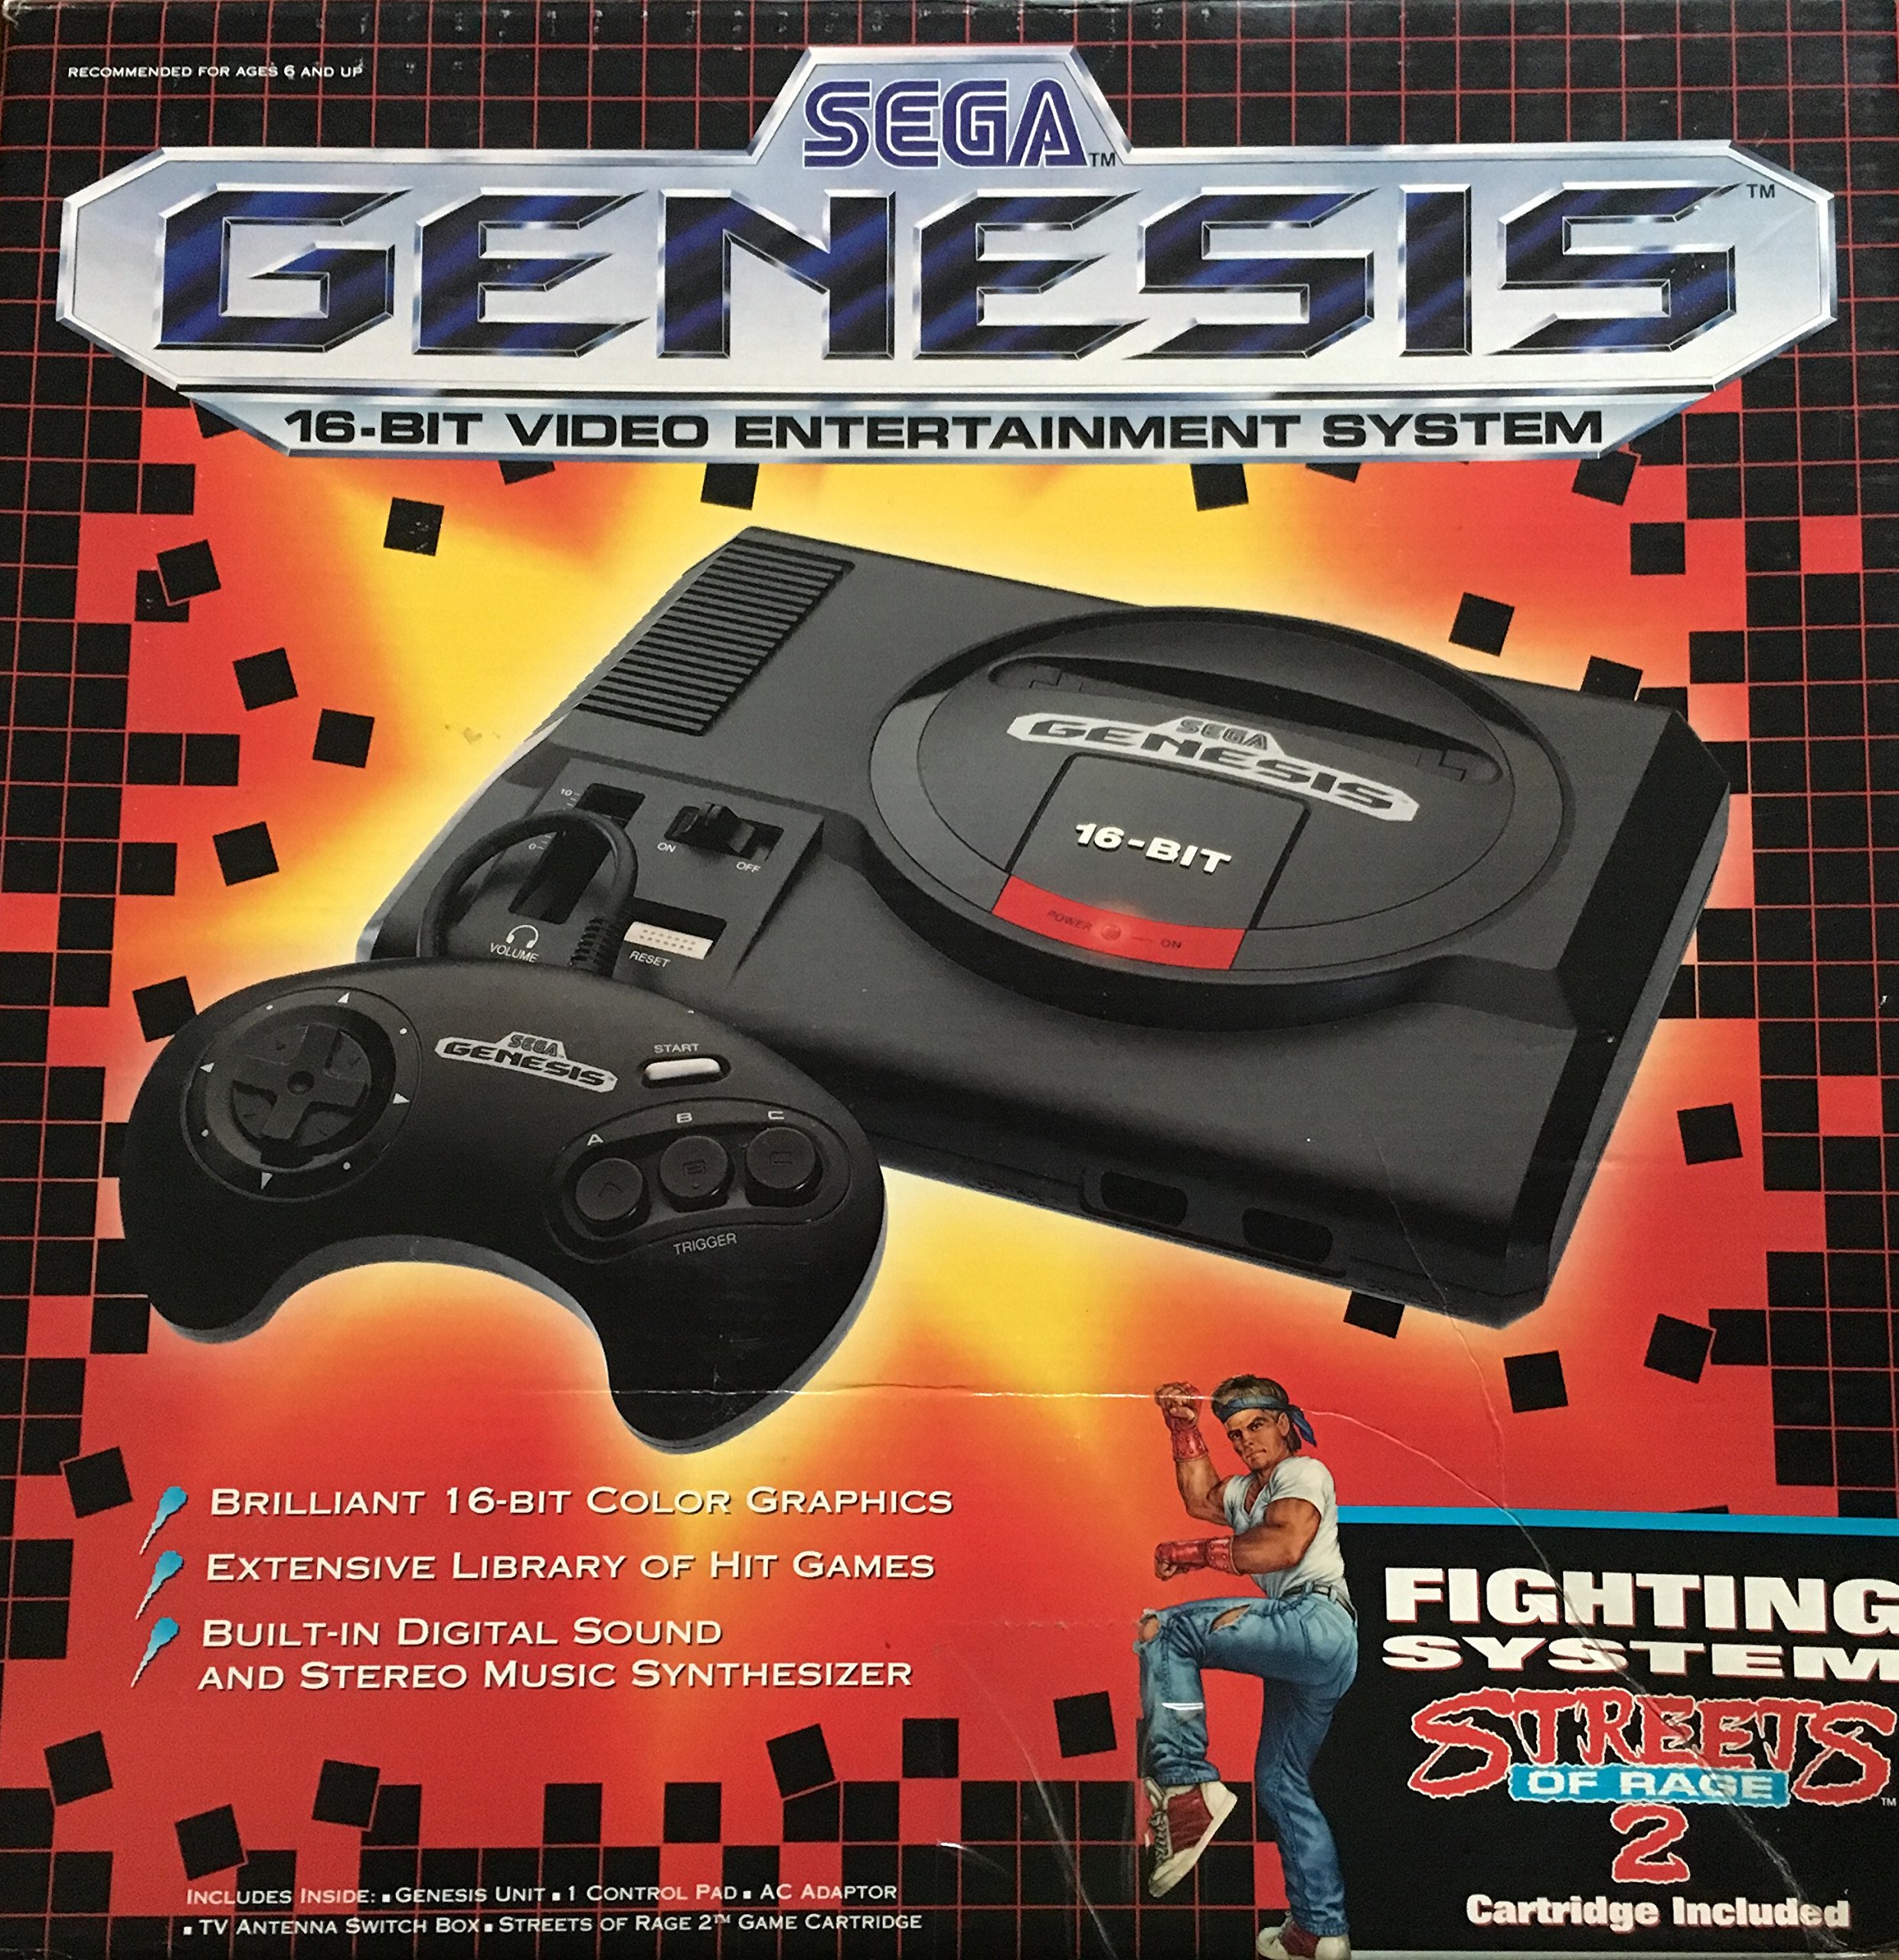 Sega Genesis System in The Box - Genesis System